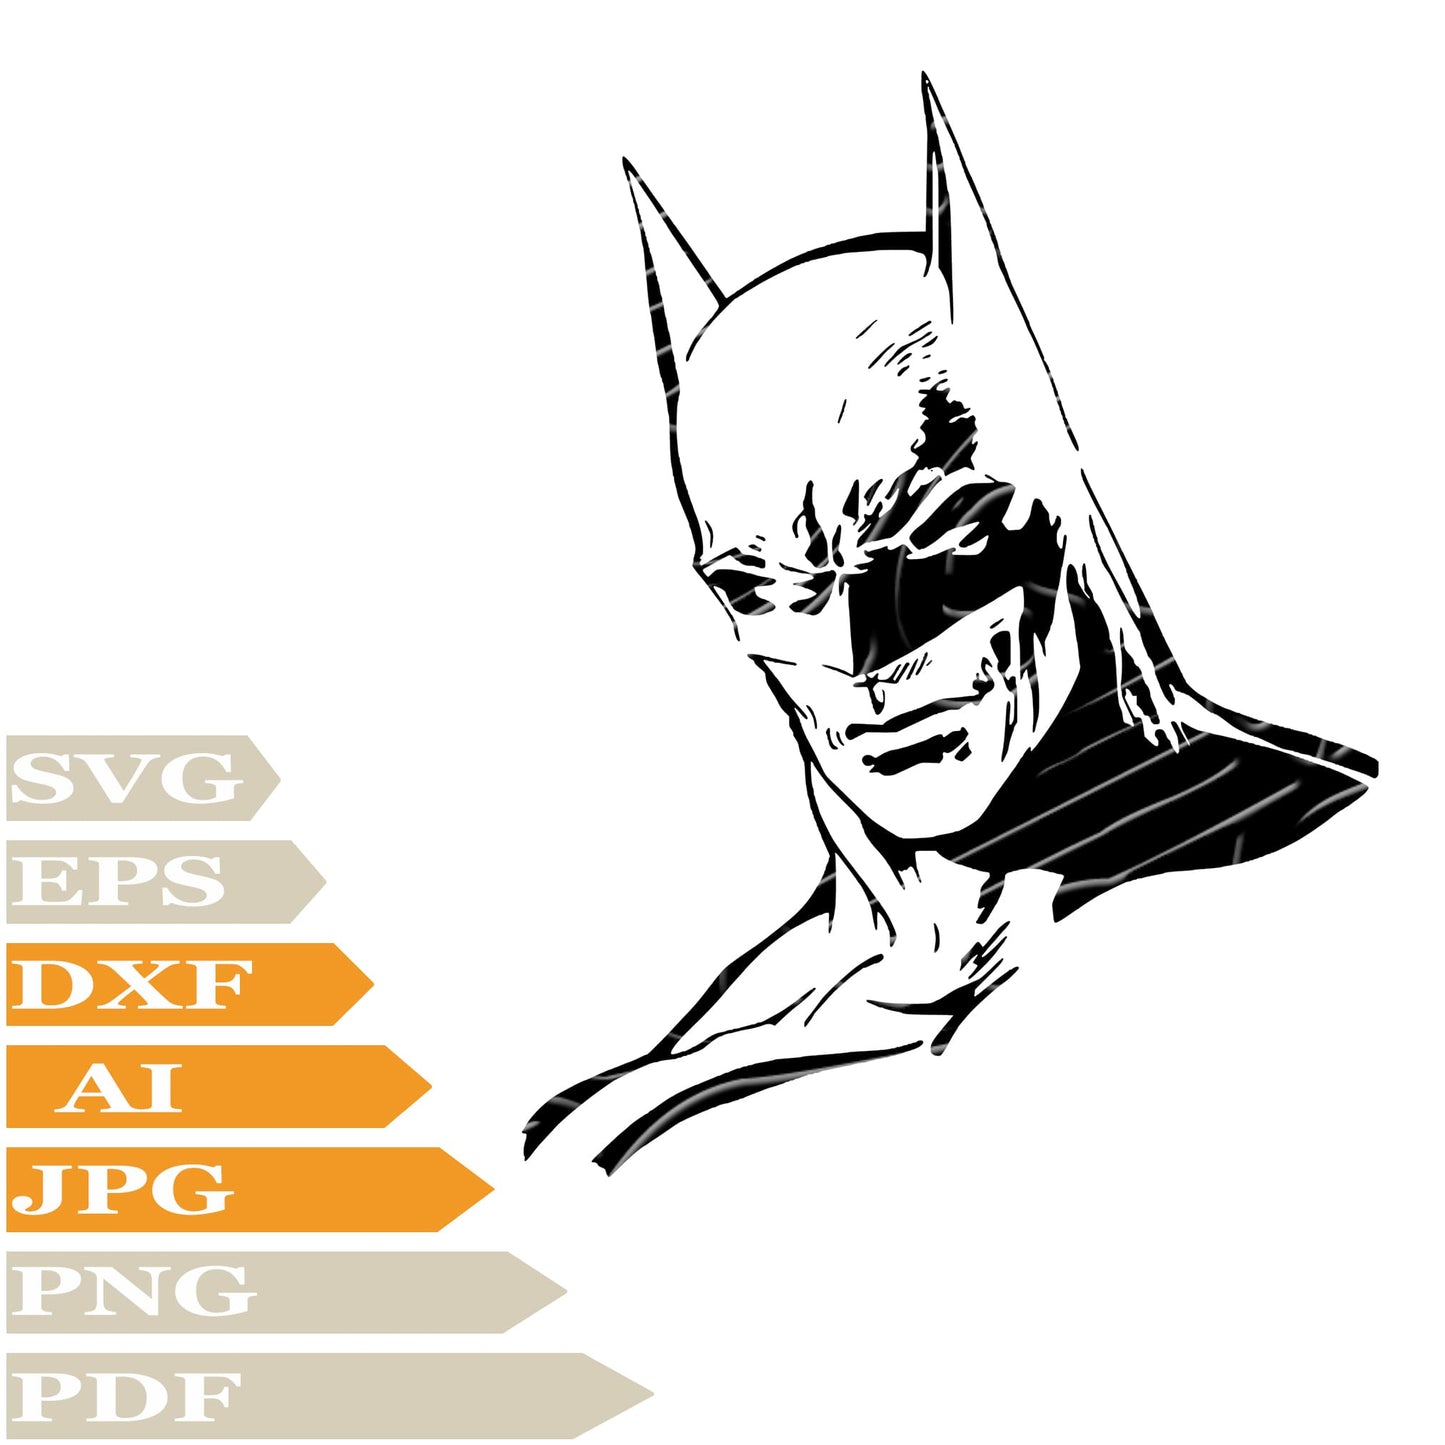 Batman, Batman Logo Svg File, Image Cut, Png, For Tattoo, Silhouette, Digital Vector Download, Cut File, Clipart, For Cricut